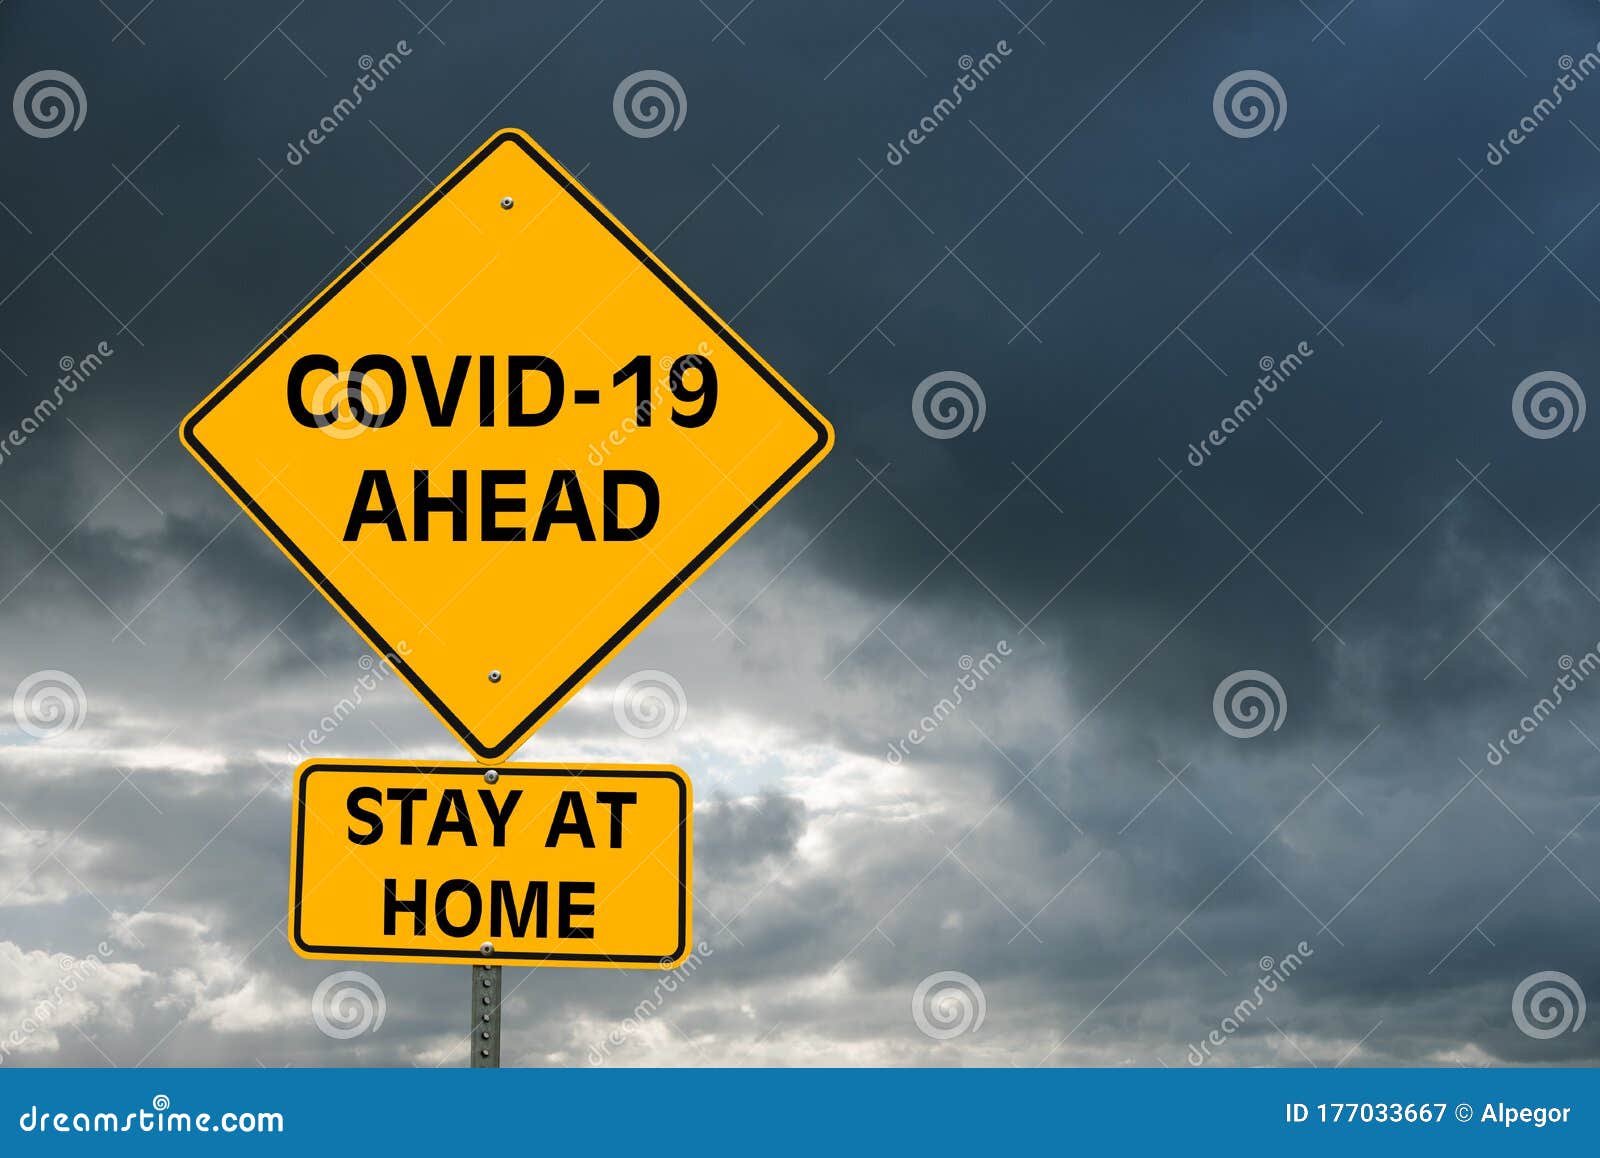 conceptual yellow warning traffic sign about coronavirus epidemic